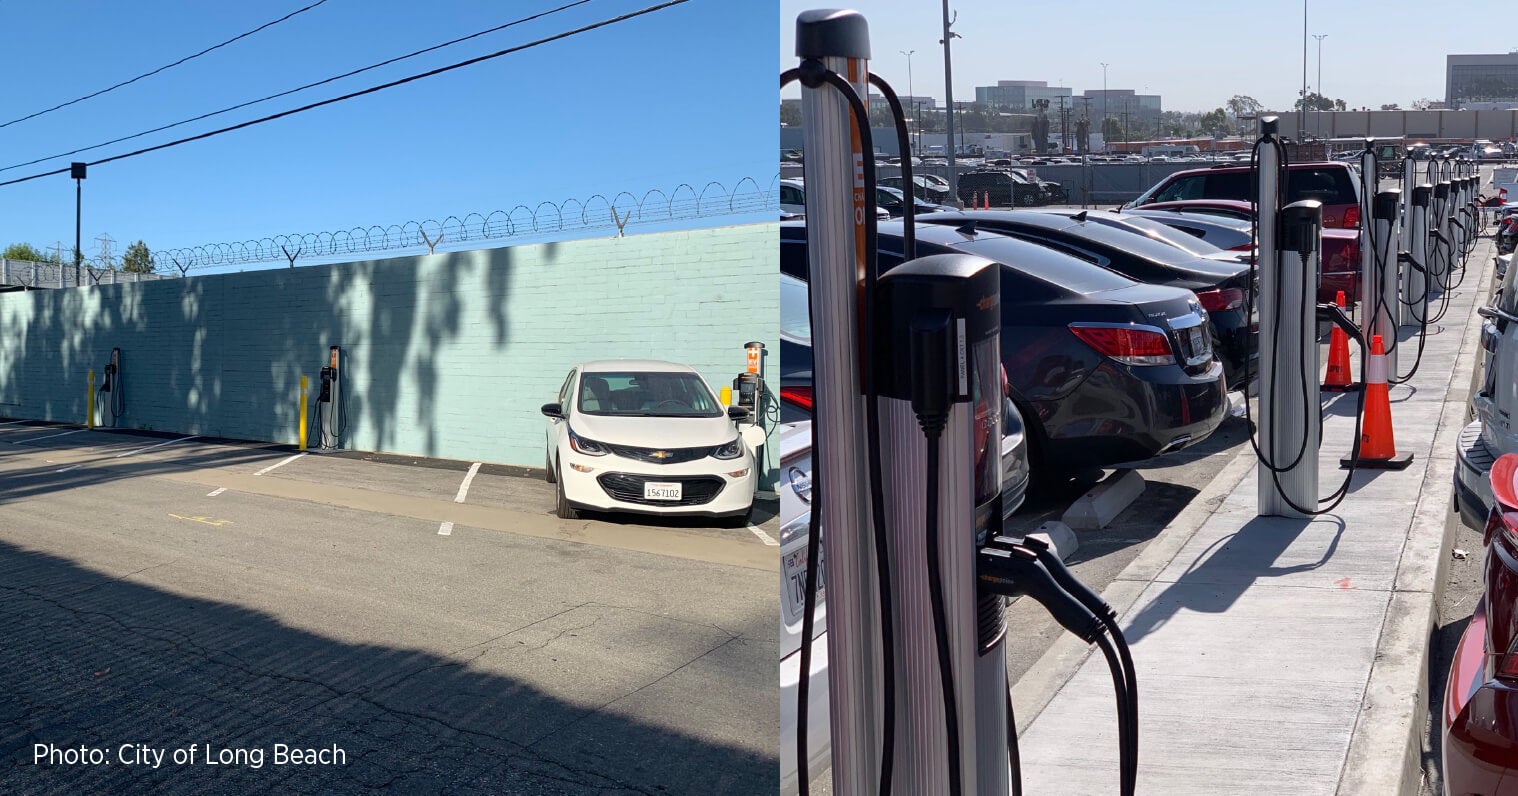 Fleet vehicles charging at City of Long Beach